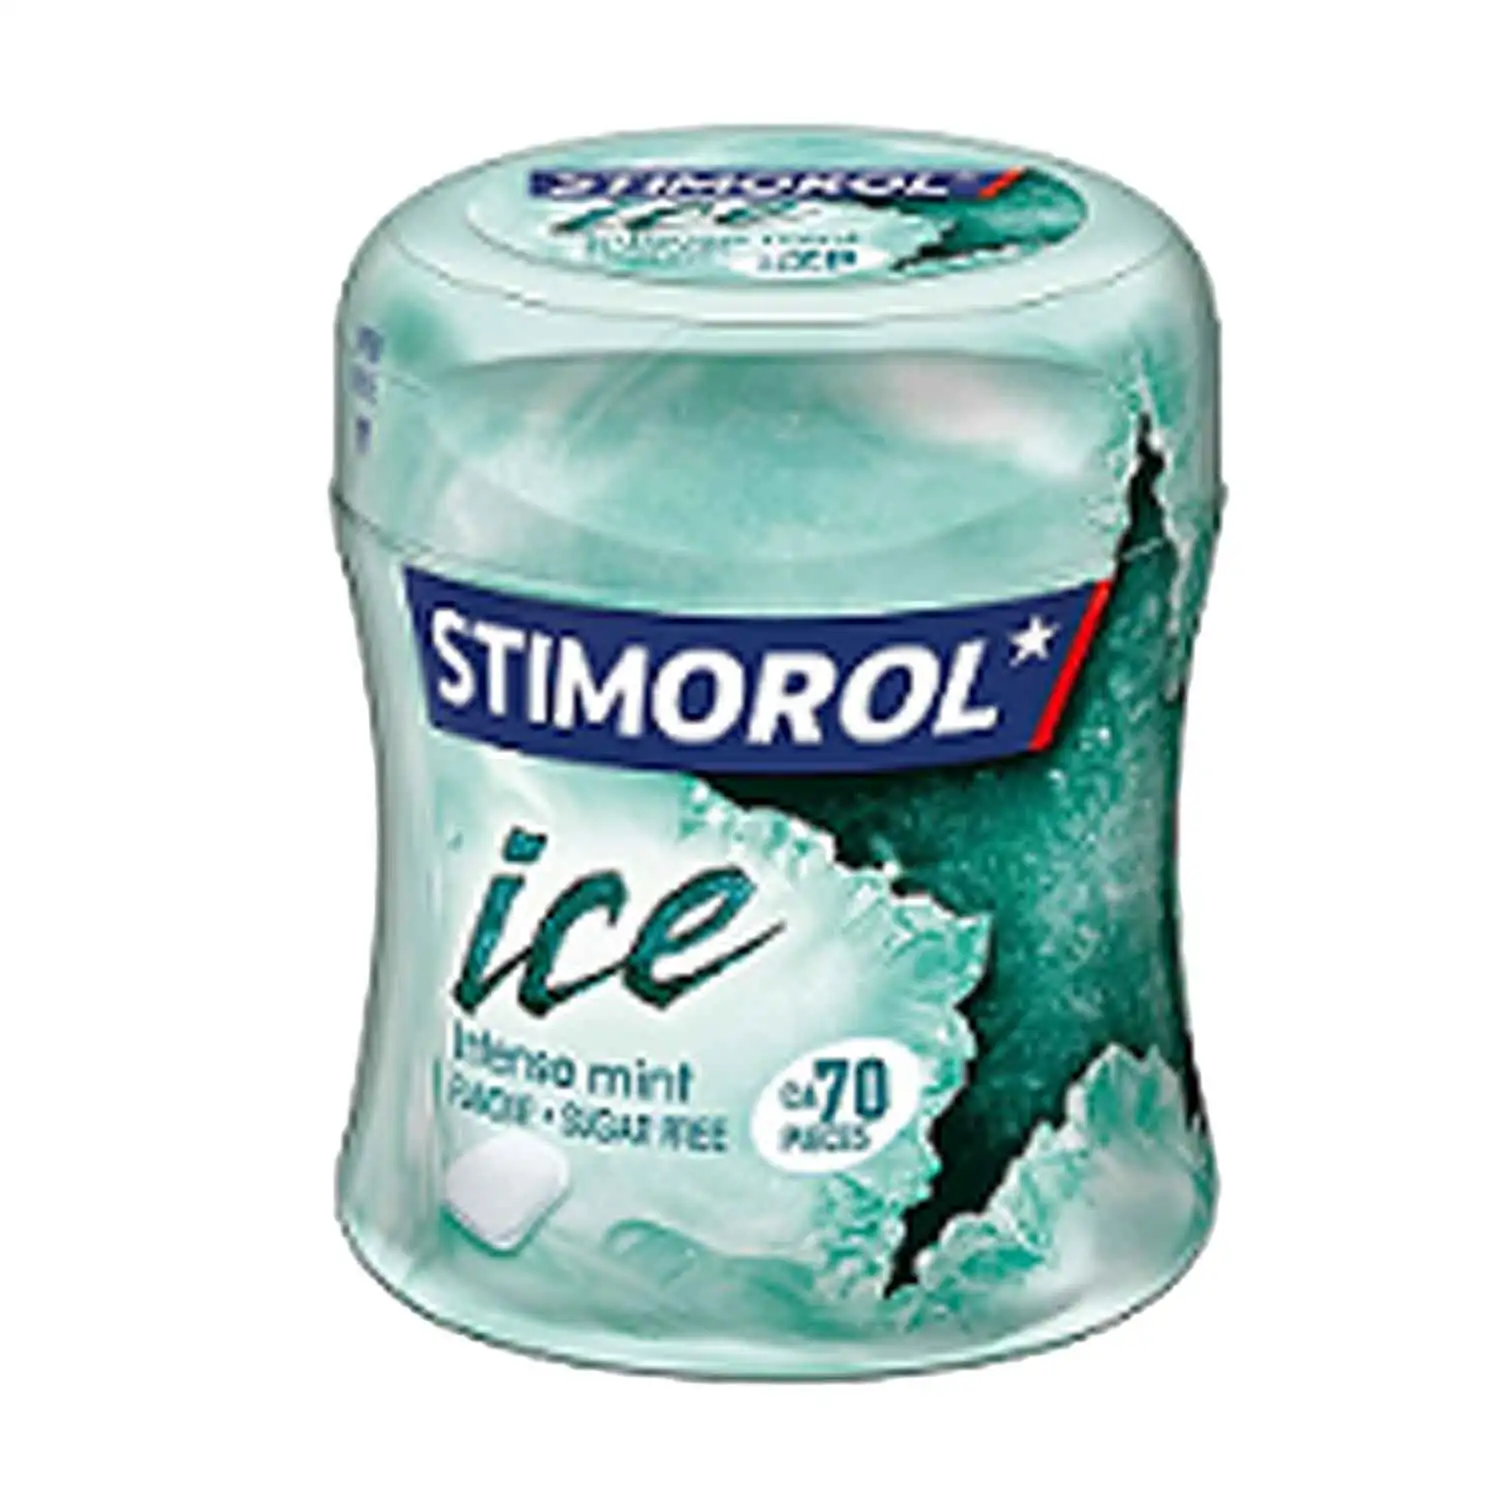 Stimorol ice intense mint 80g